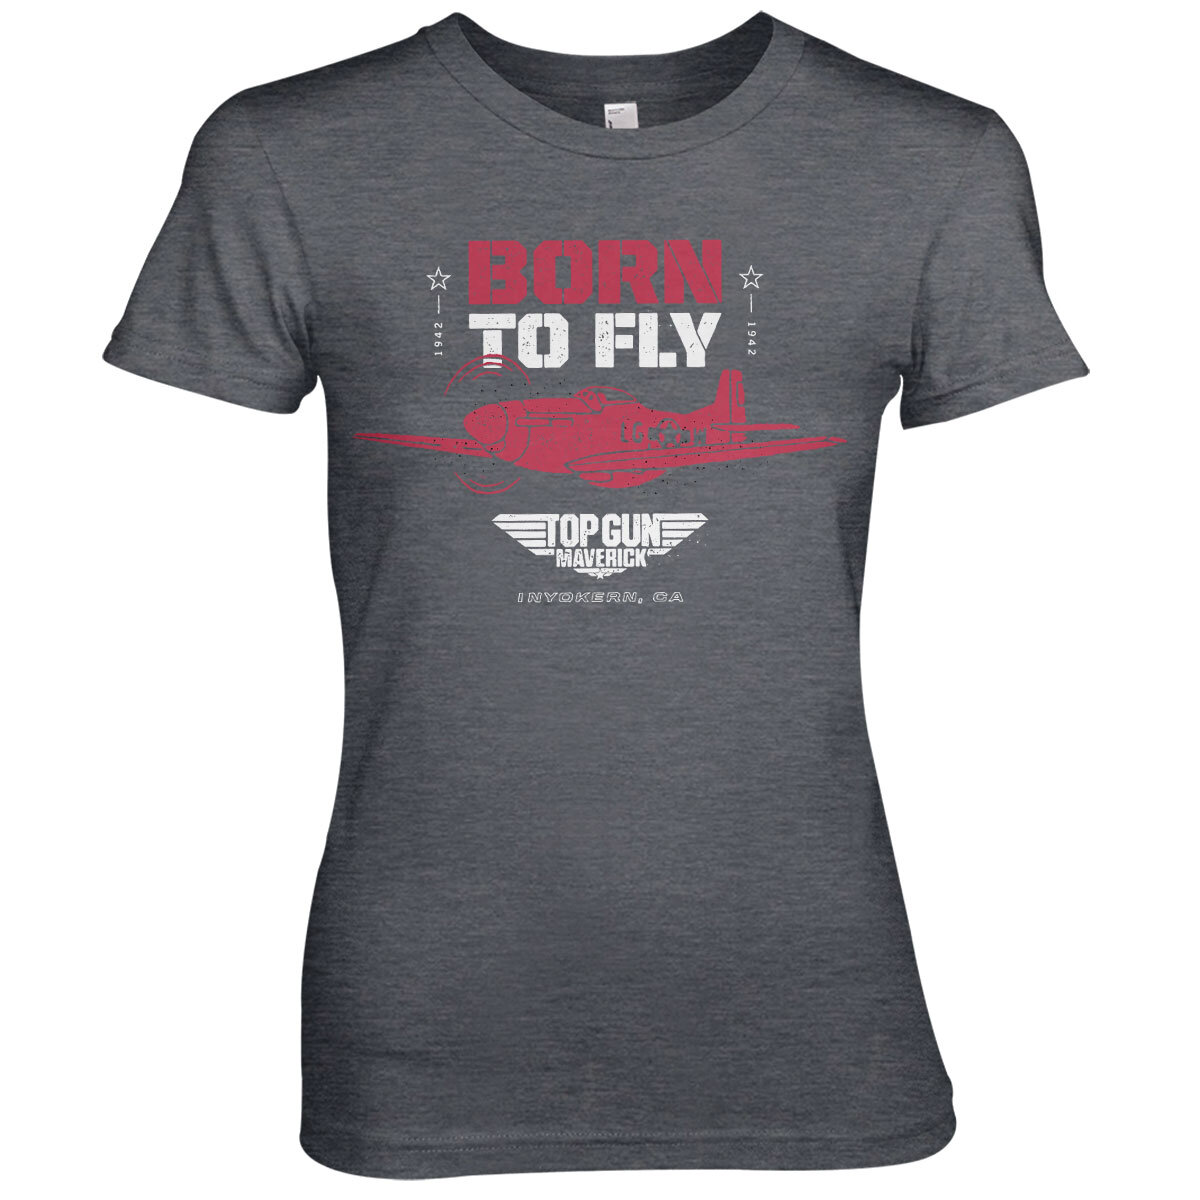 Top Gun - Born To Fly Girly Tee